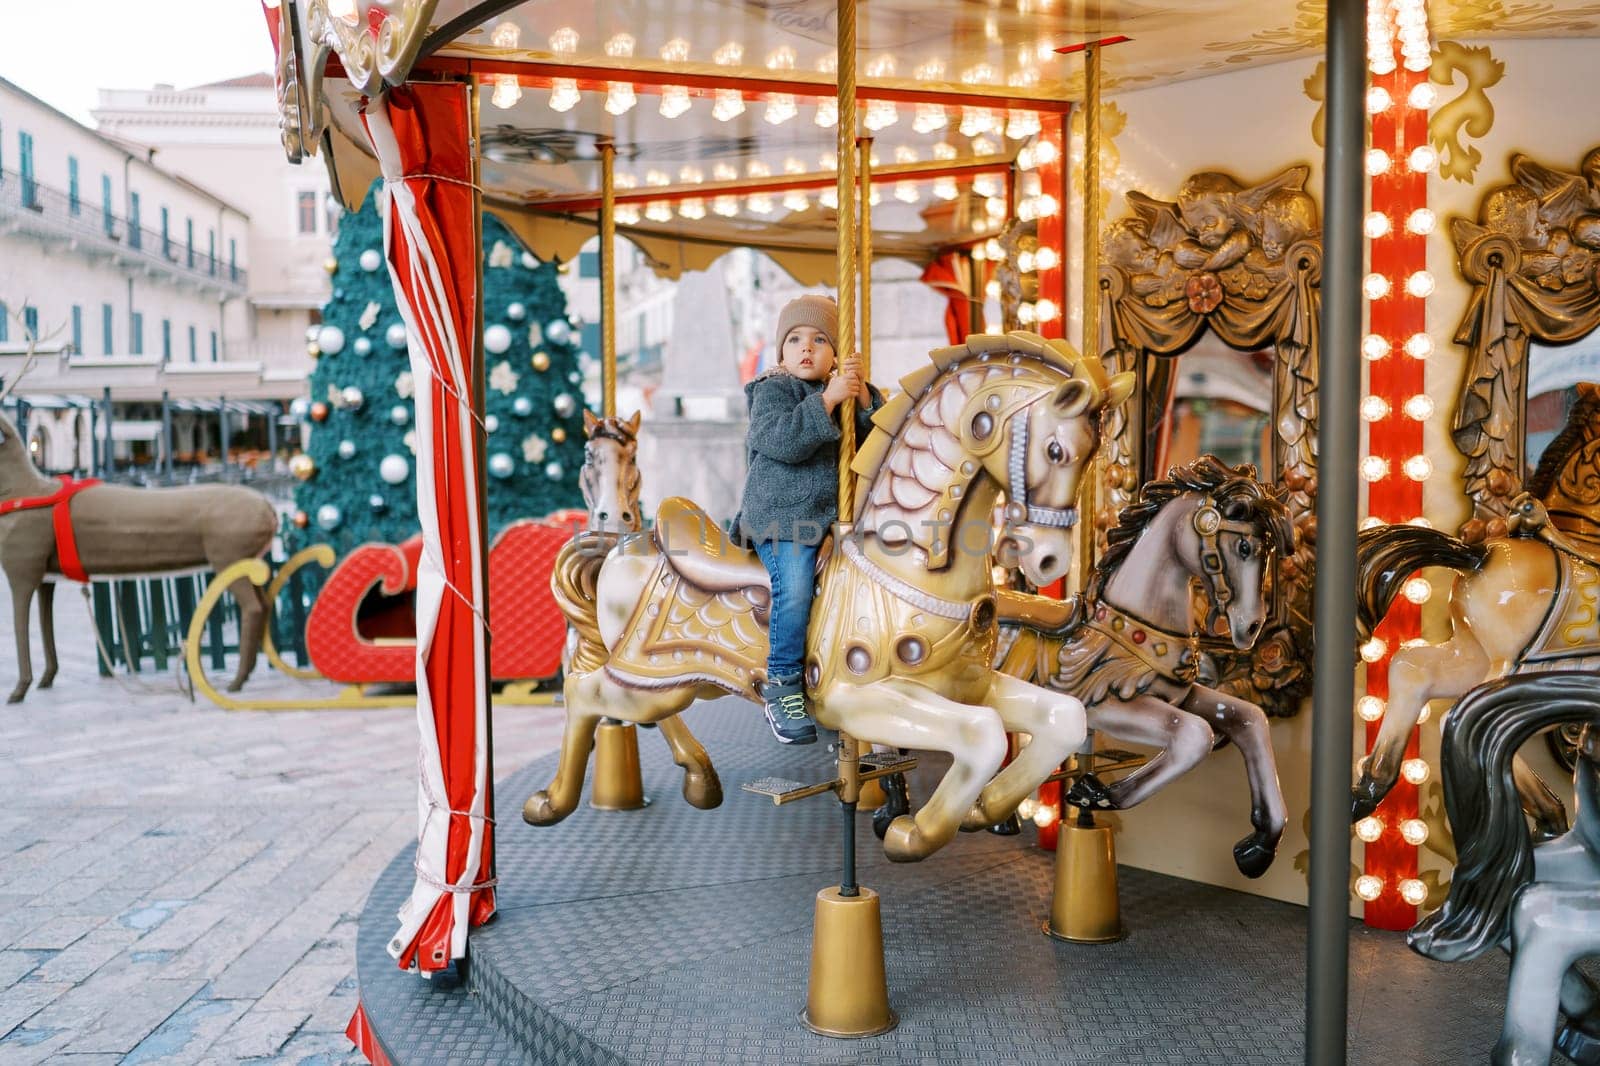 Little girl rides a toy horse on a carousel at a fair near a decorated Christmas tree near an old house. High quality photo